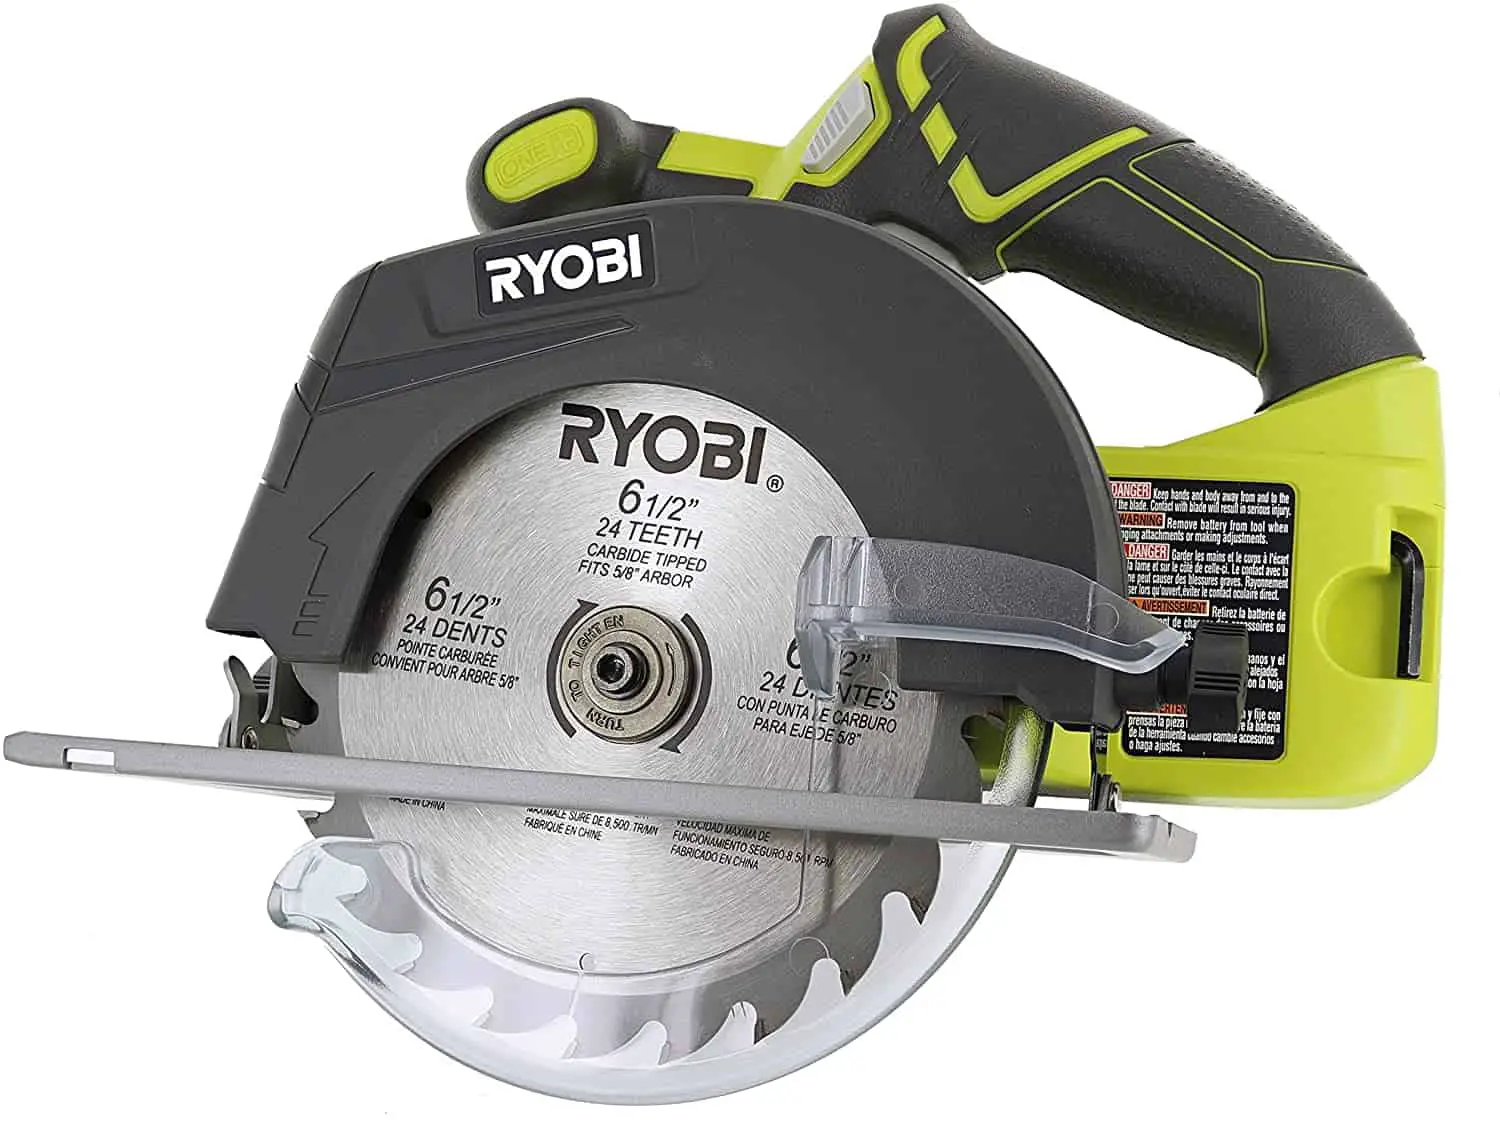 Ryobi P507 One+ circular saw